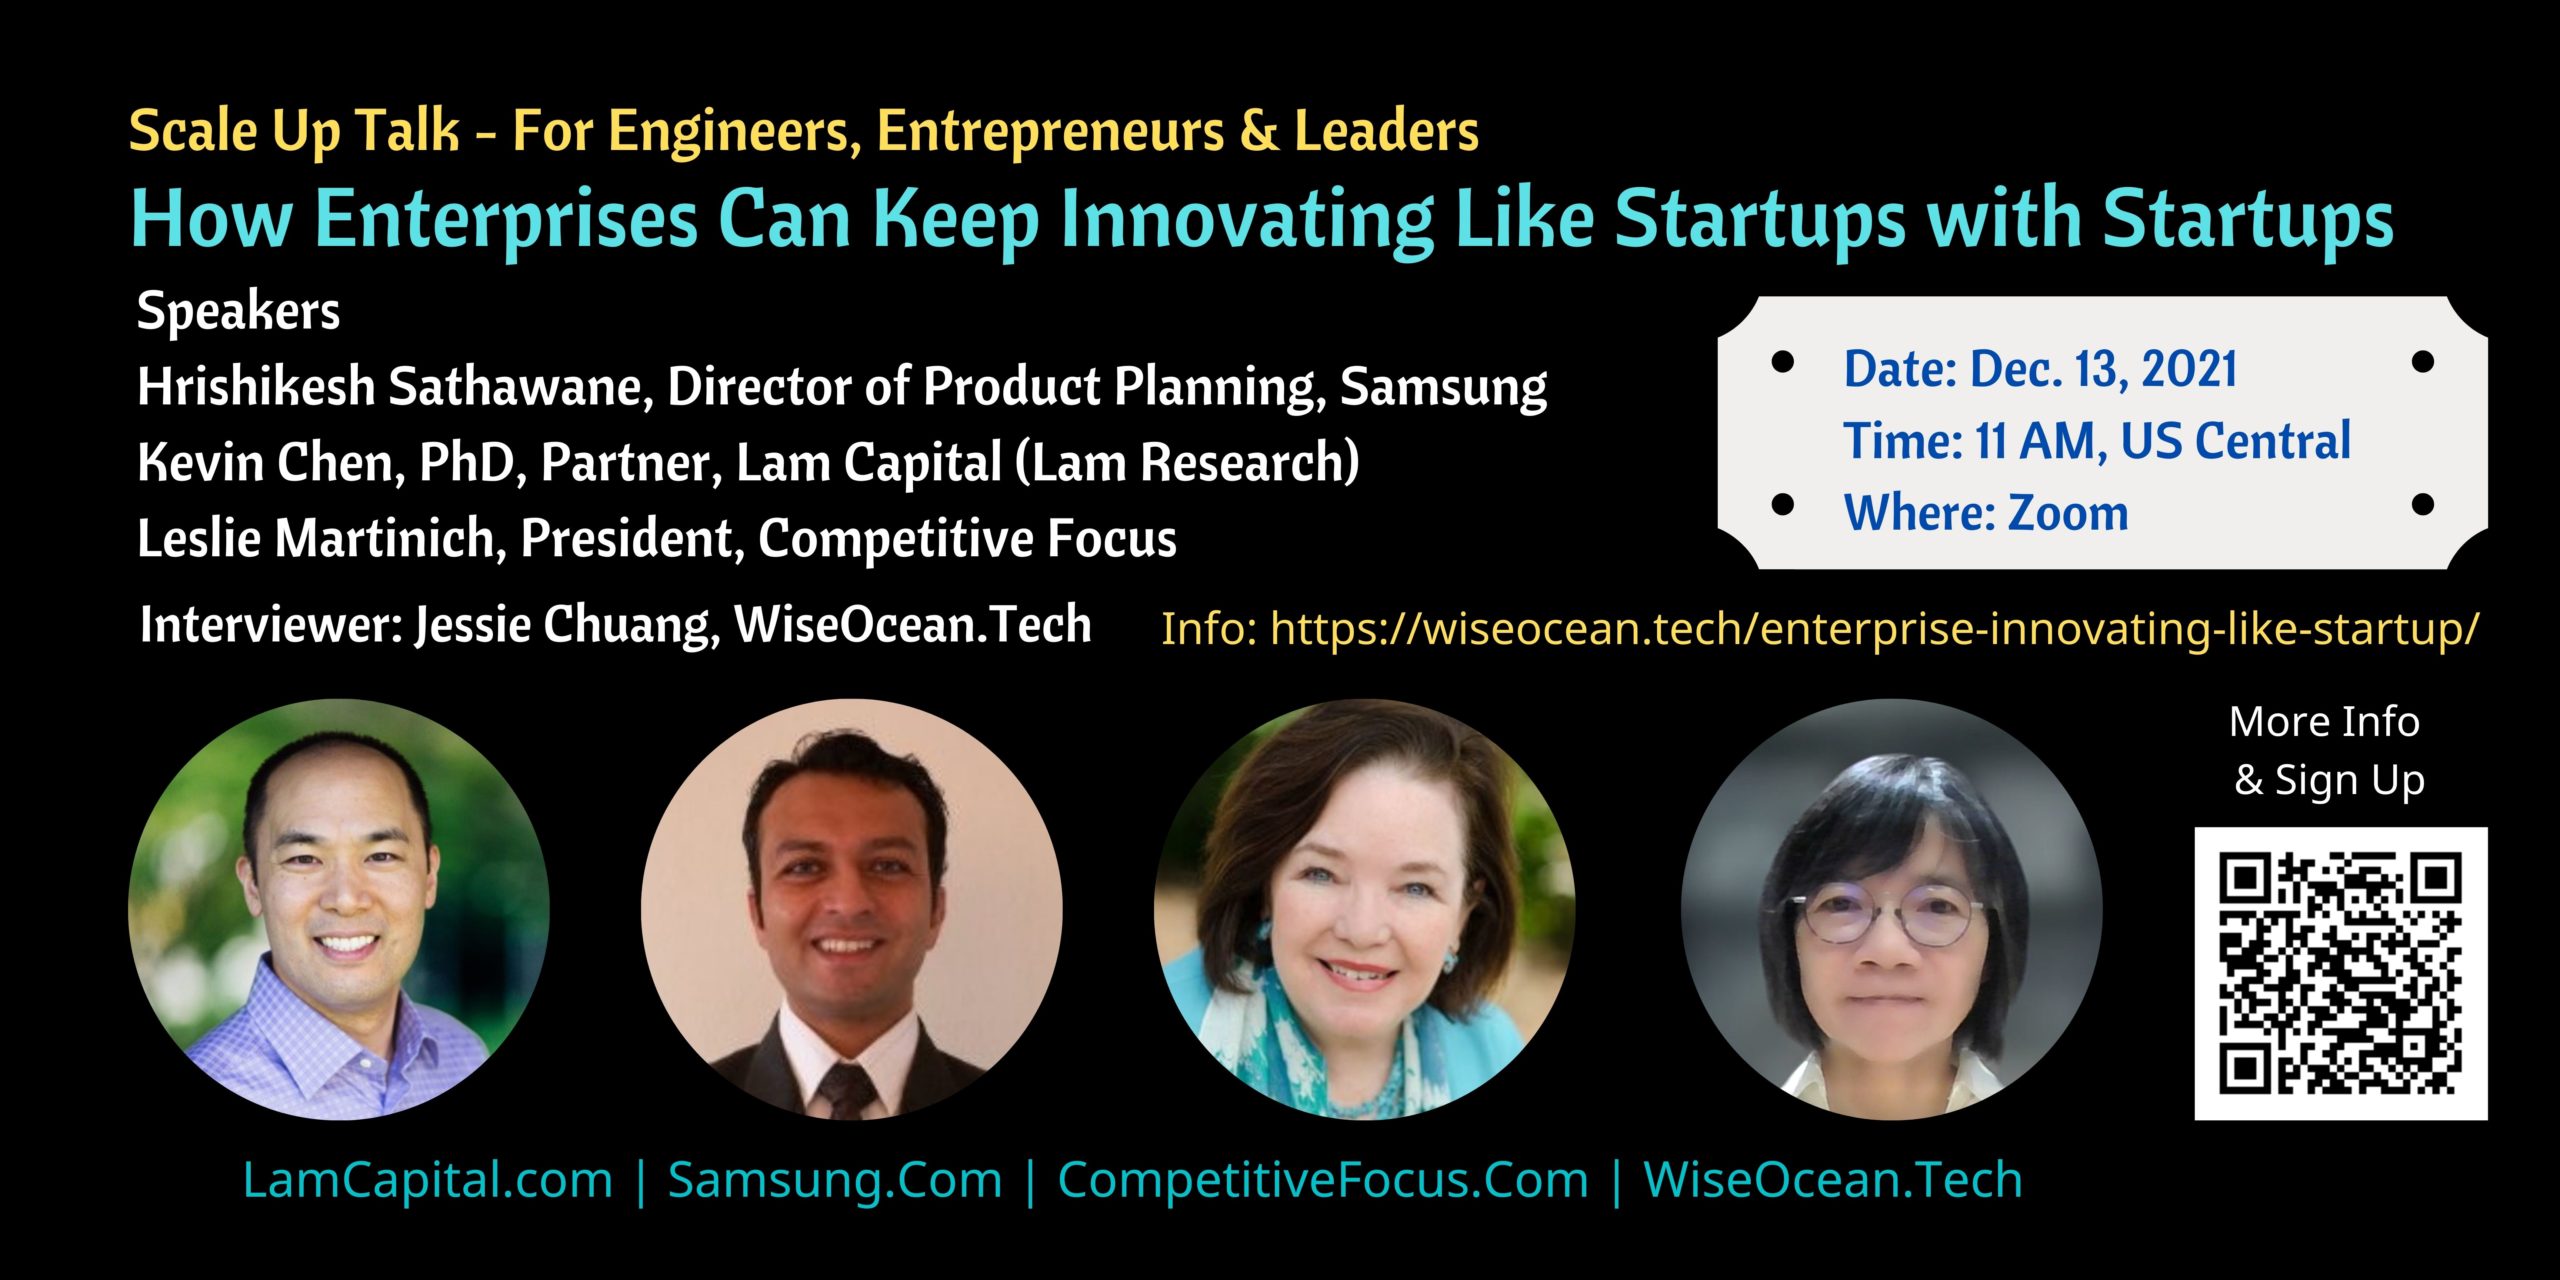 Enterprise innovating like startups with startups